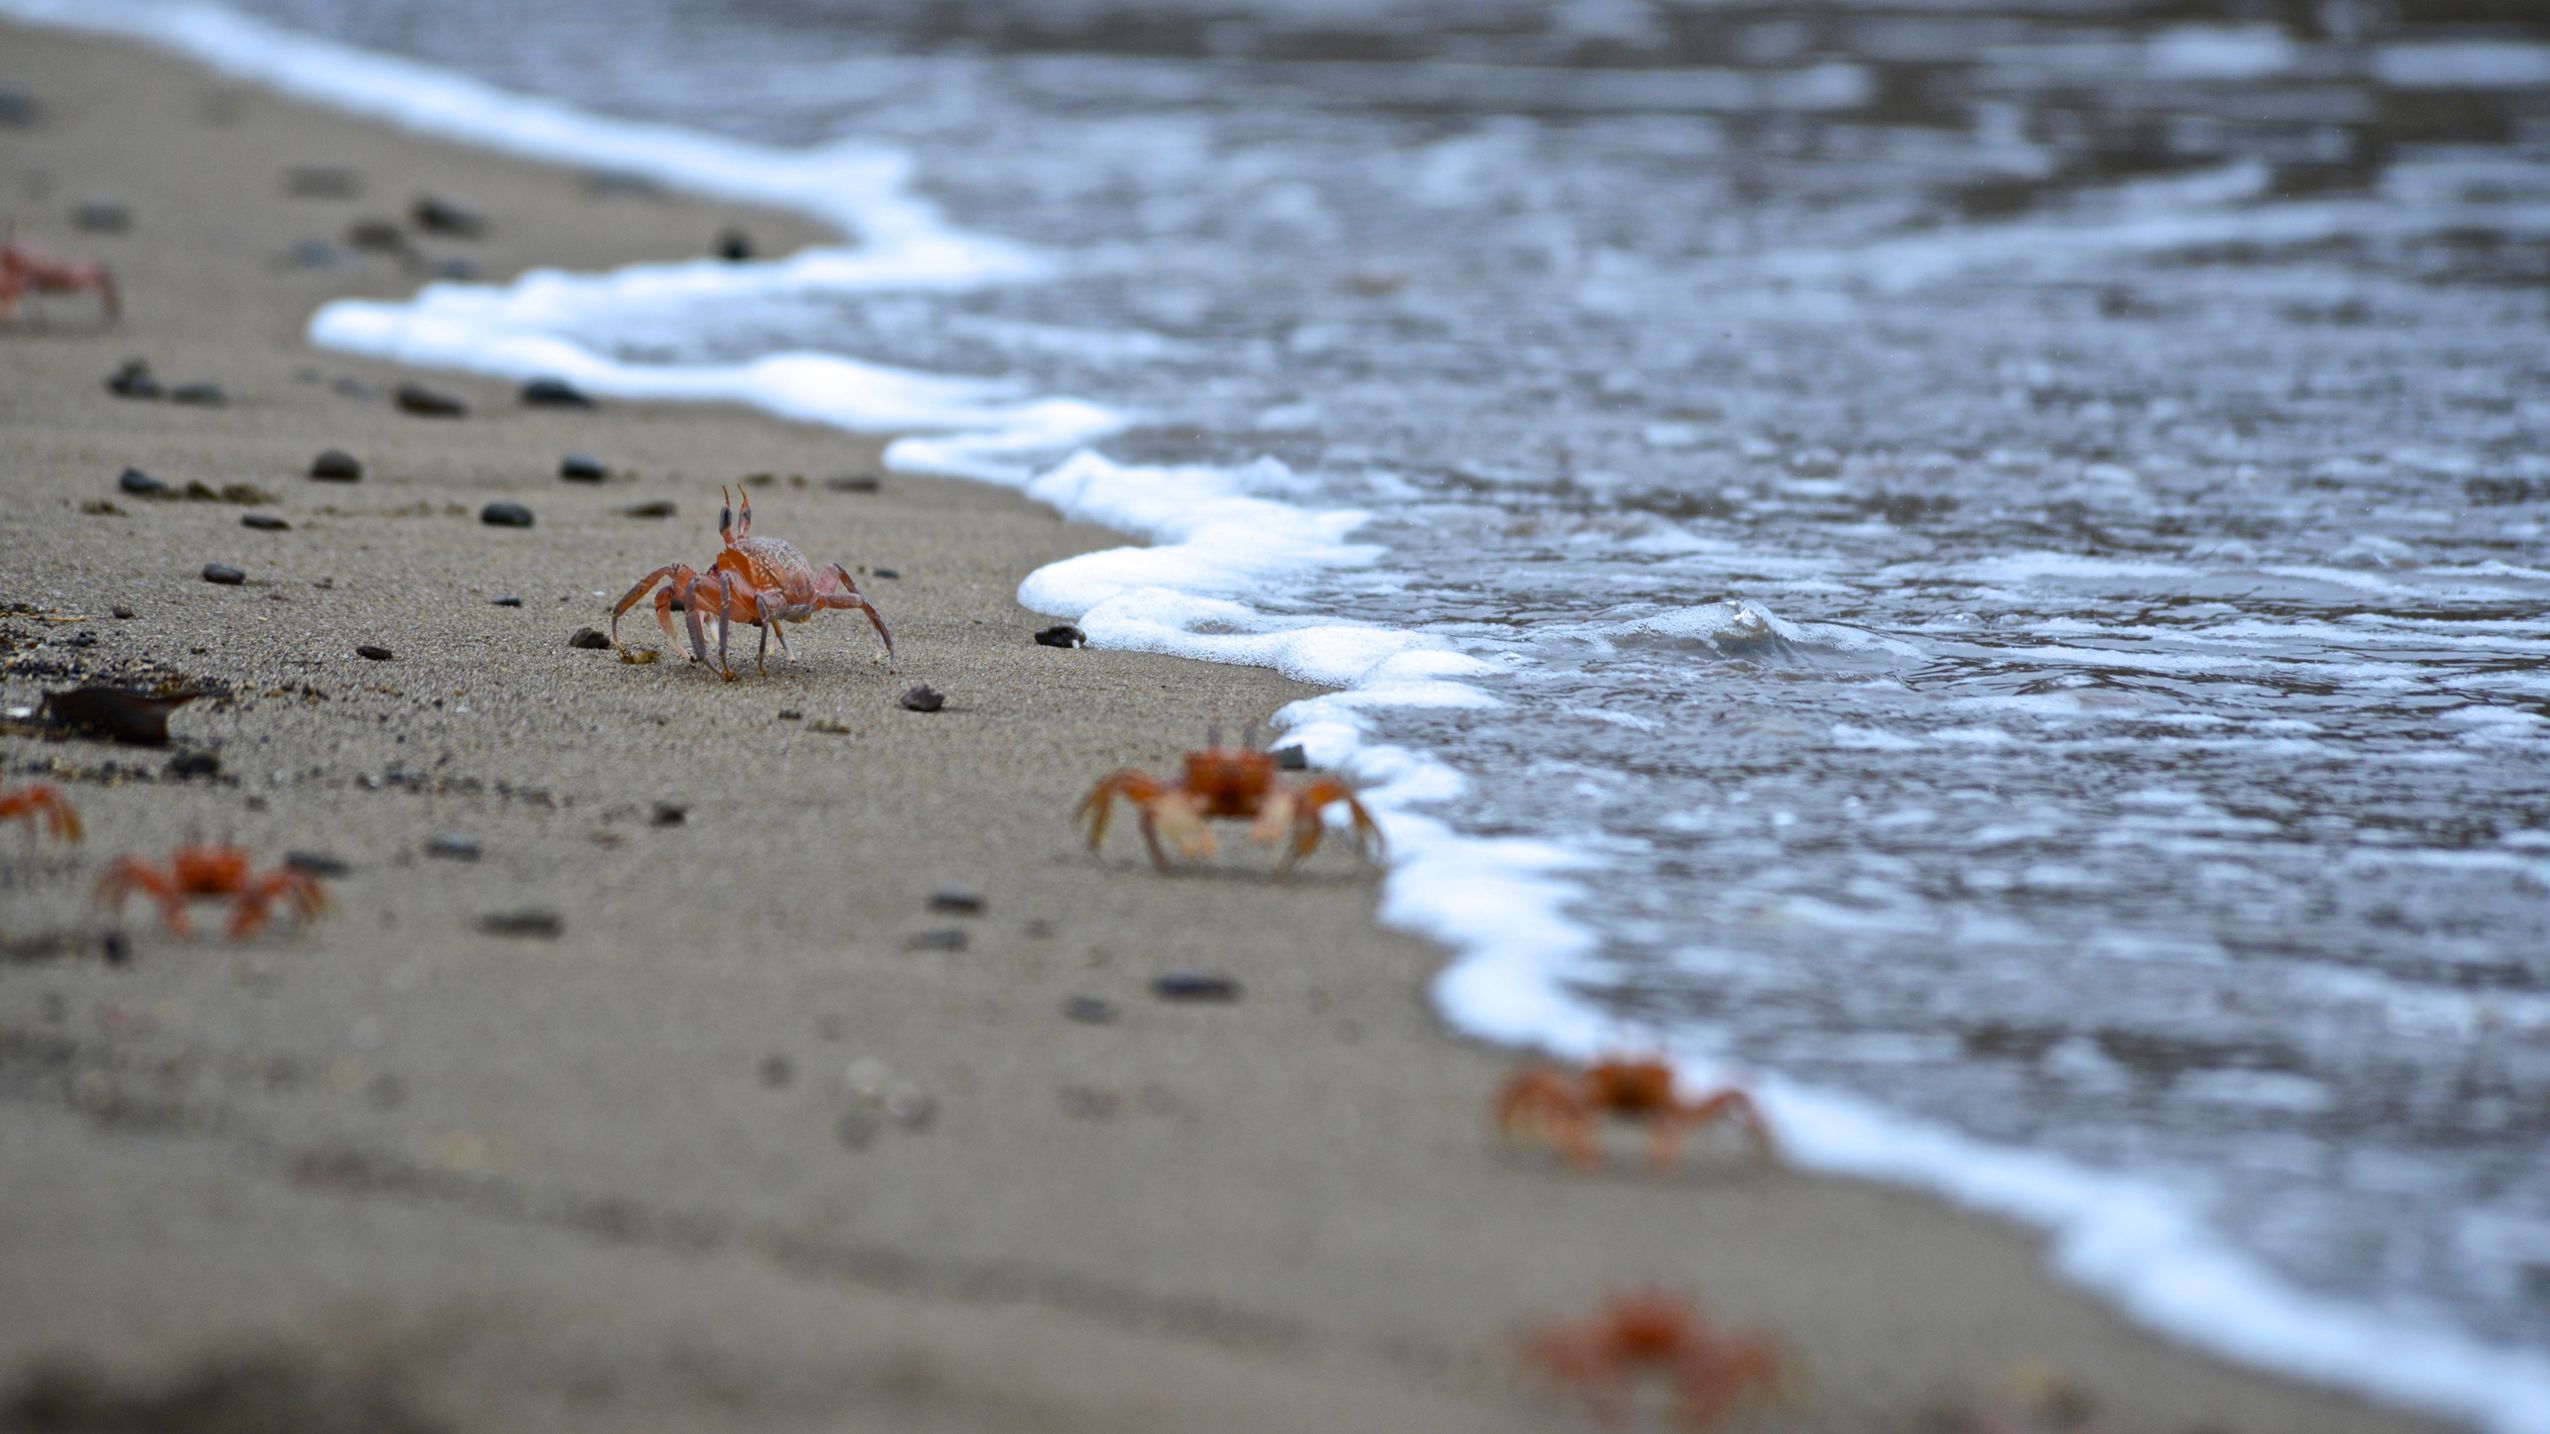 Red crabs, or ghost crabs, on Isla de la Plata, a small island off the coast of Manabí, Ecuador. 